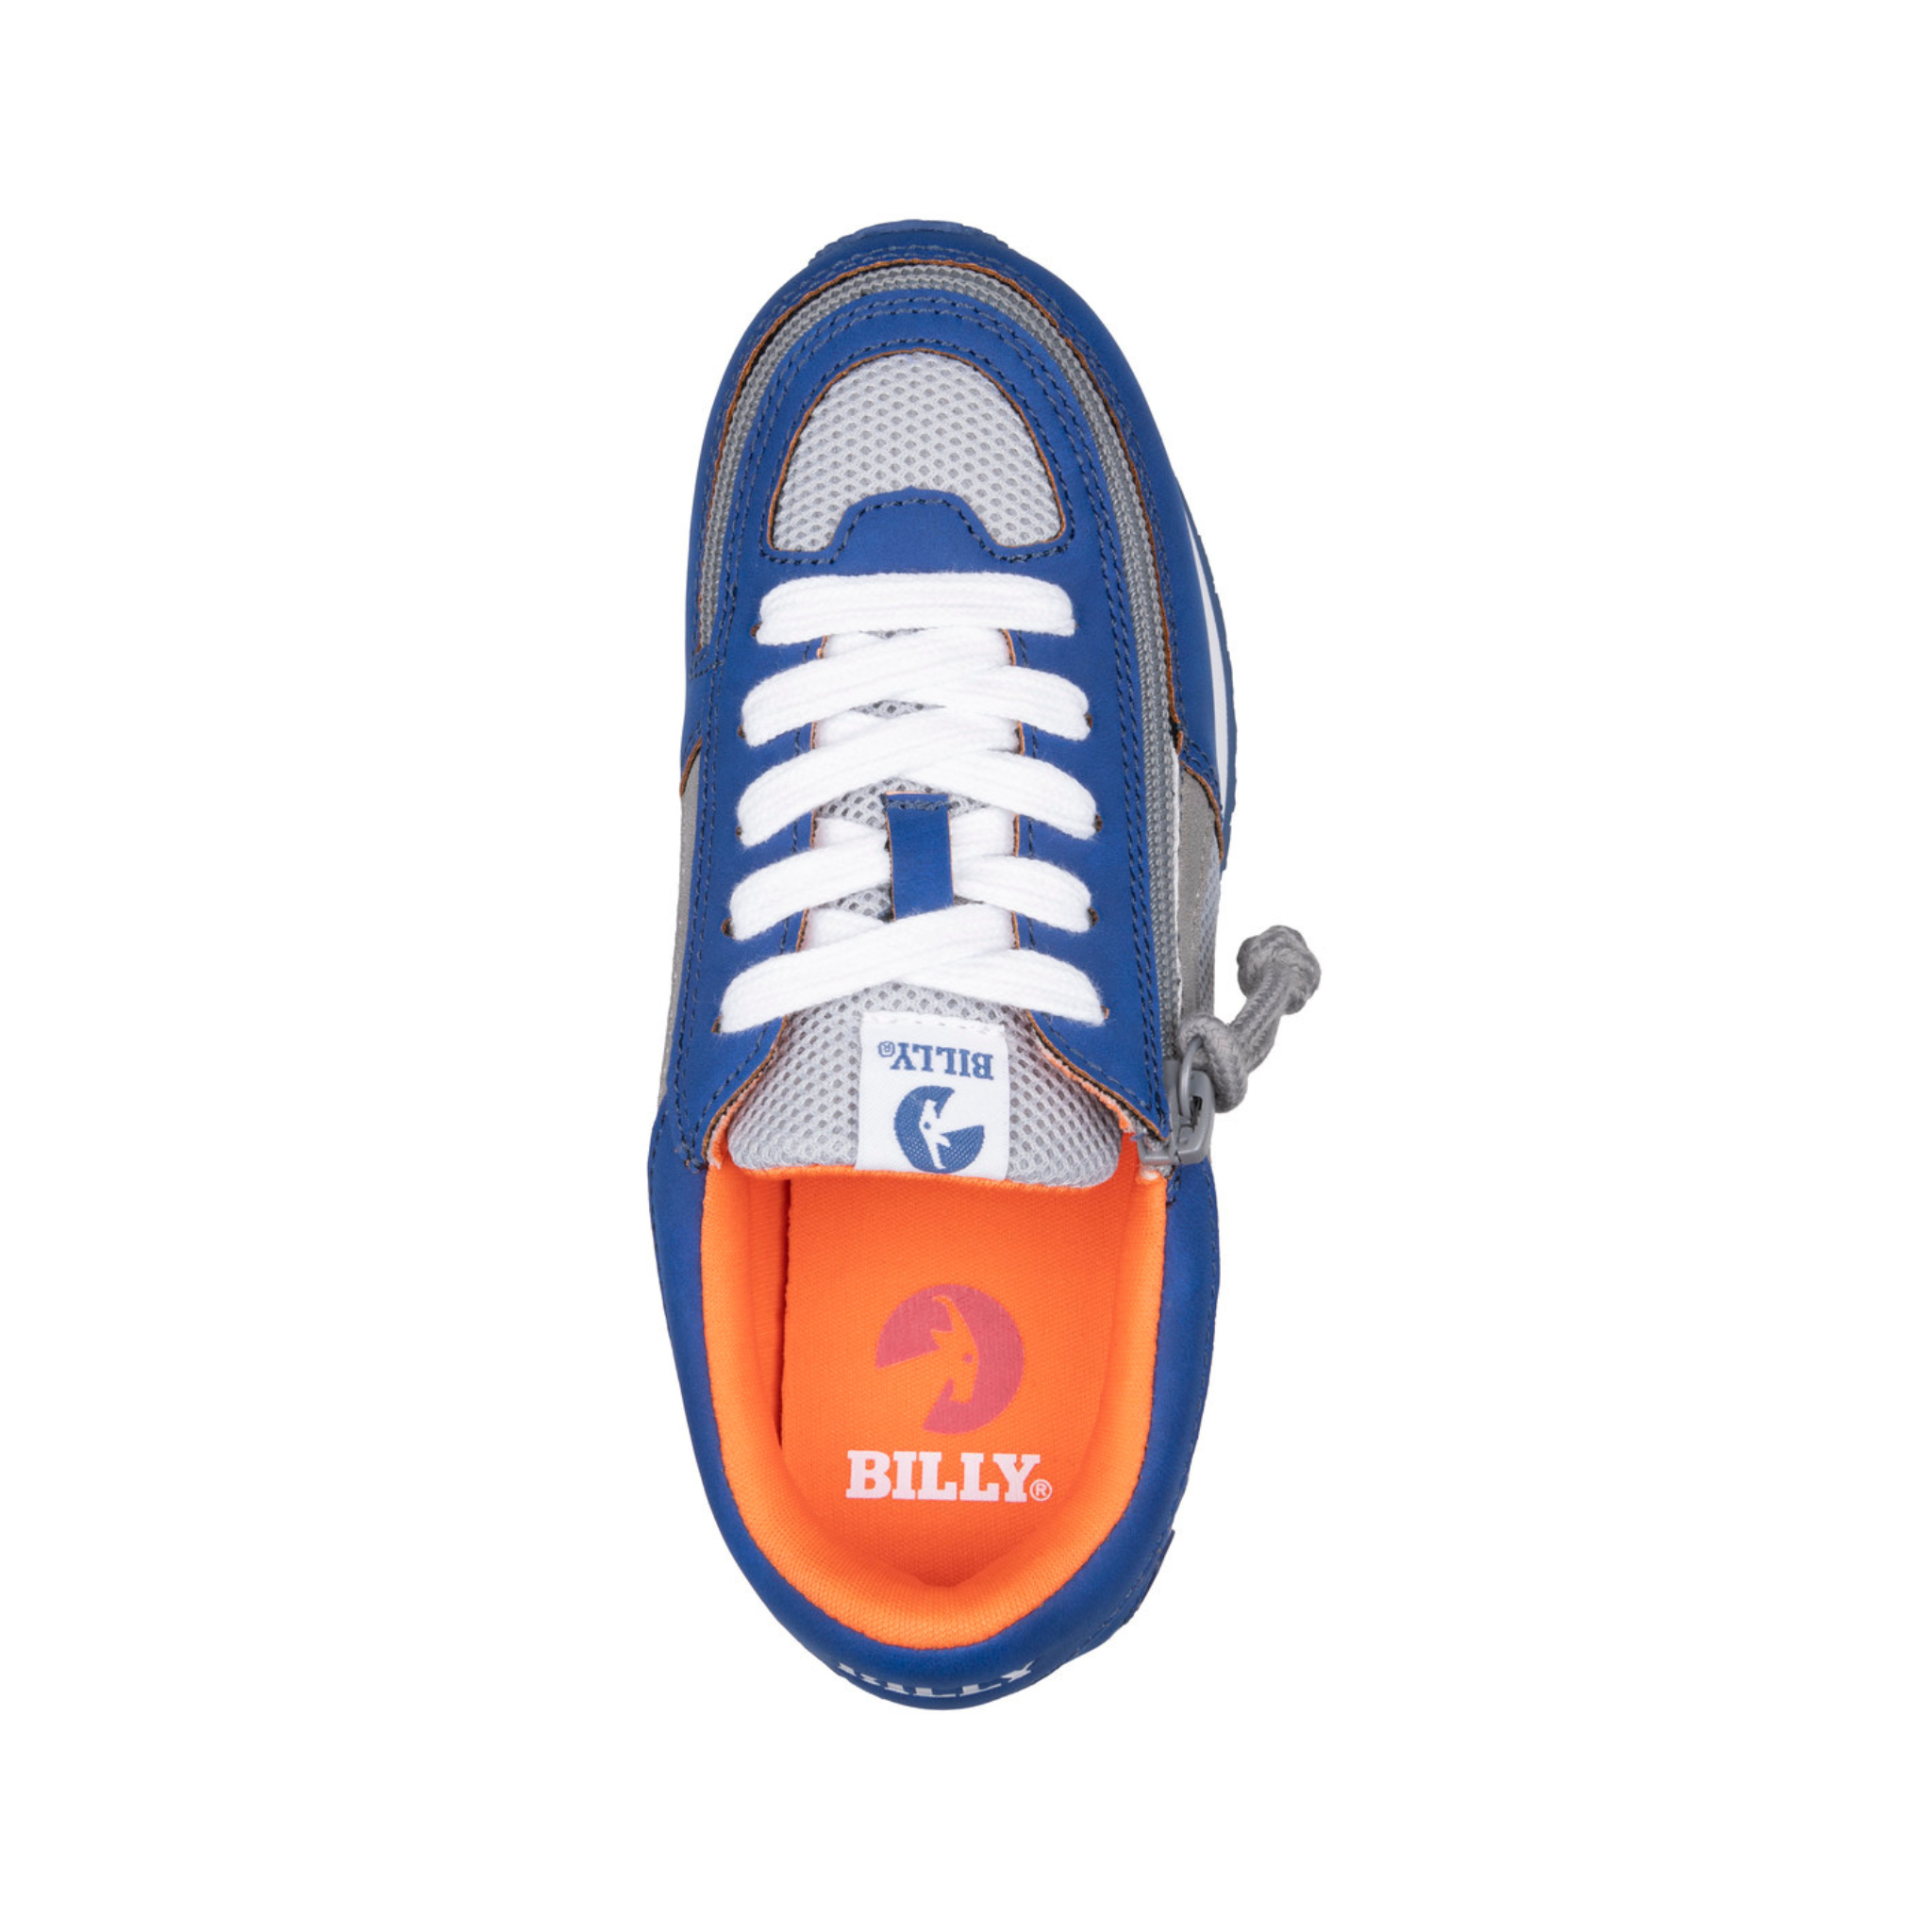 Billy Footwear (Kids) - Navy / Orange Faux Suede Trainers